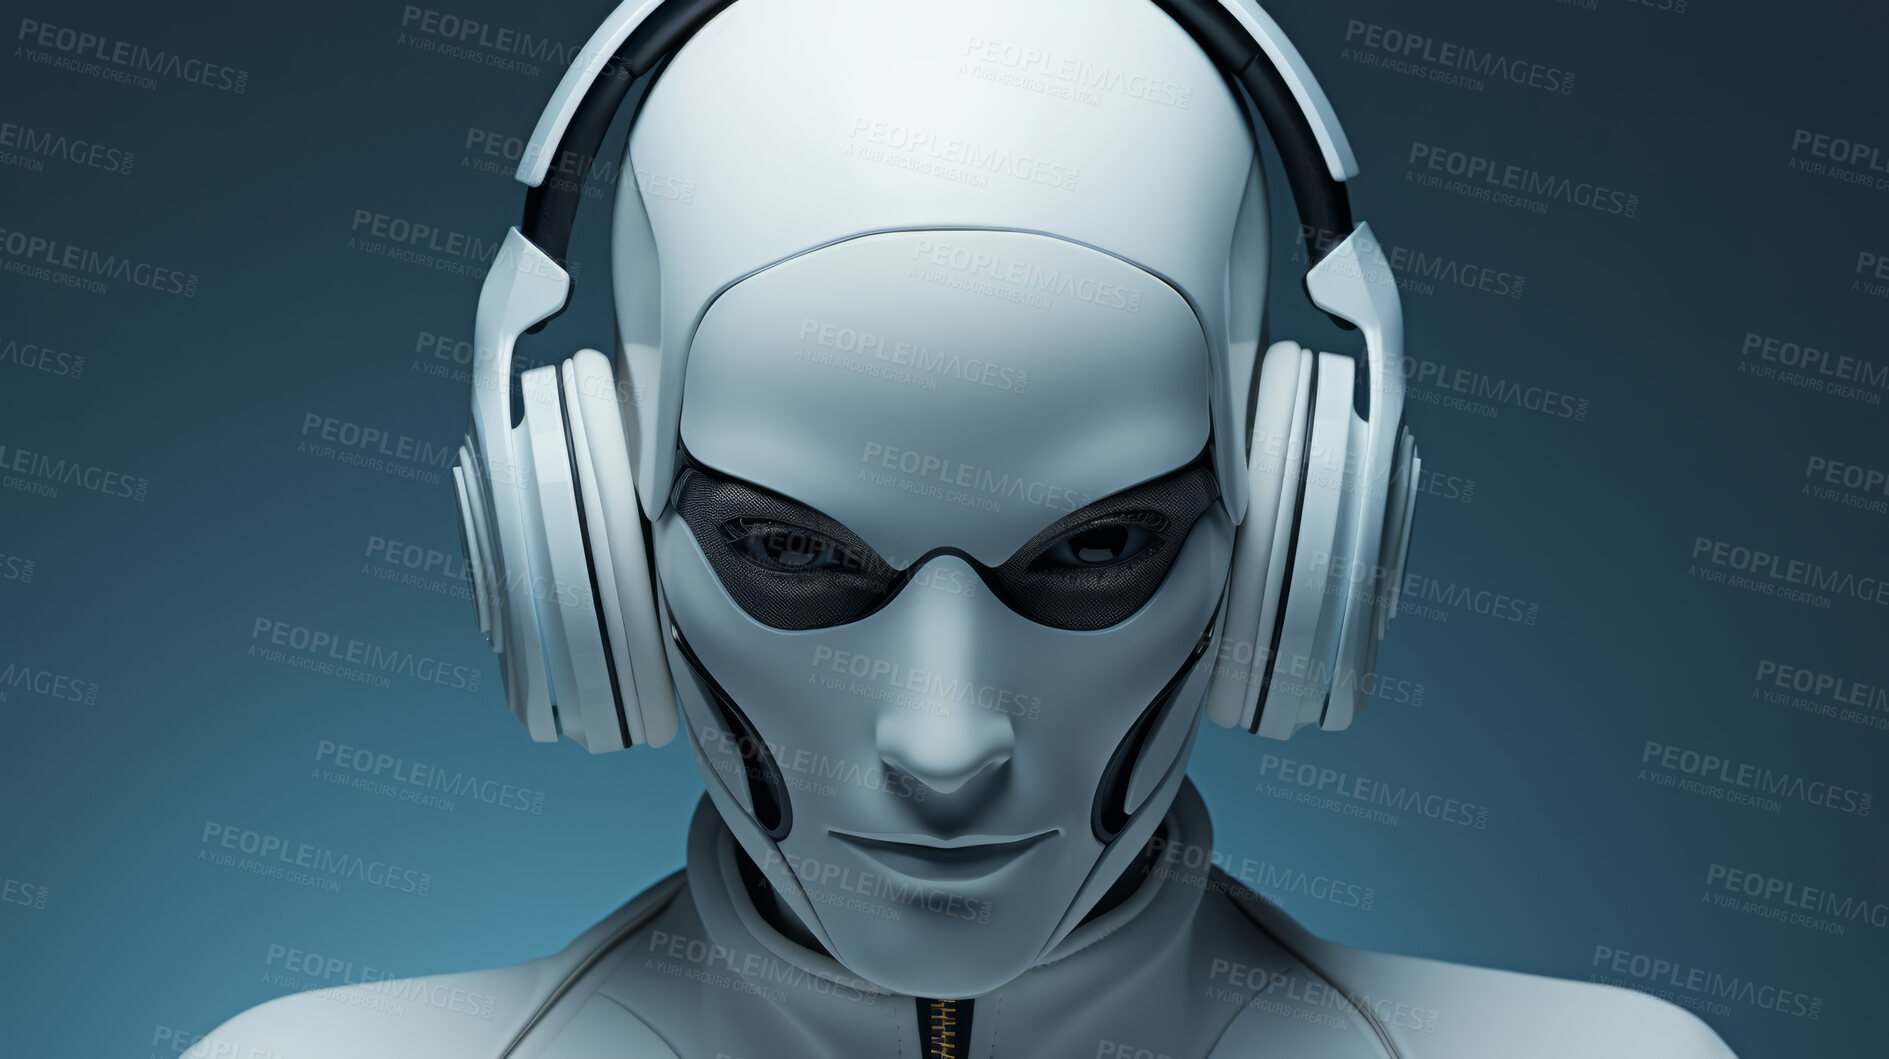 Buy stock photo Futuristic android, robot, portrait.Humanoid cyber machine on plain grey backdrop.